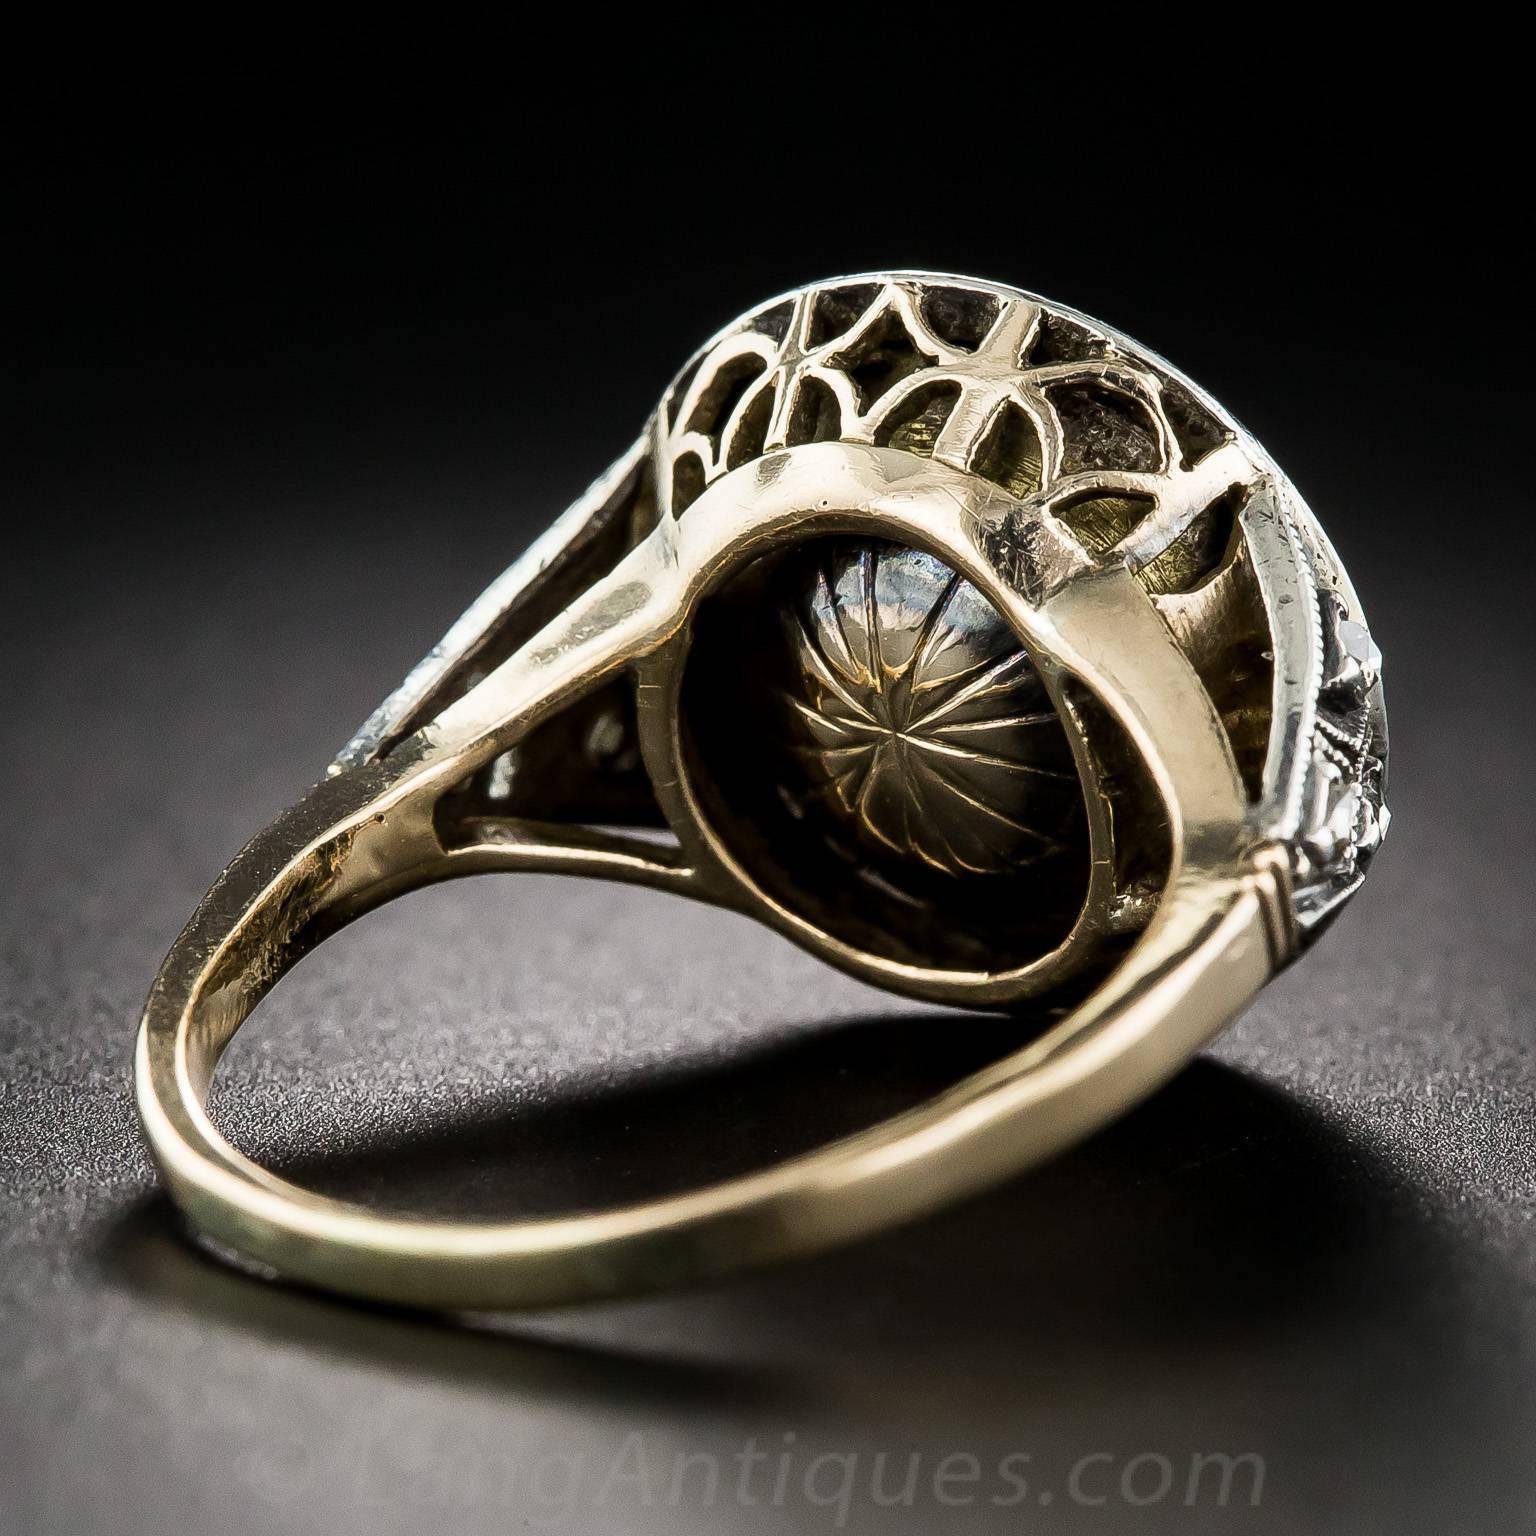 Women's or Men's Large Rose-Cut Diamond Solitaire Ring